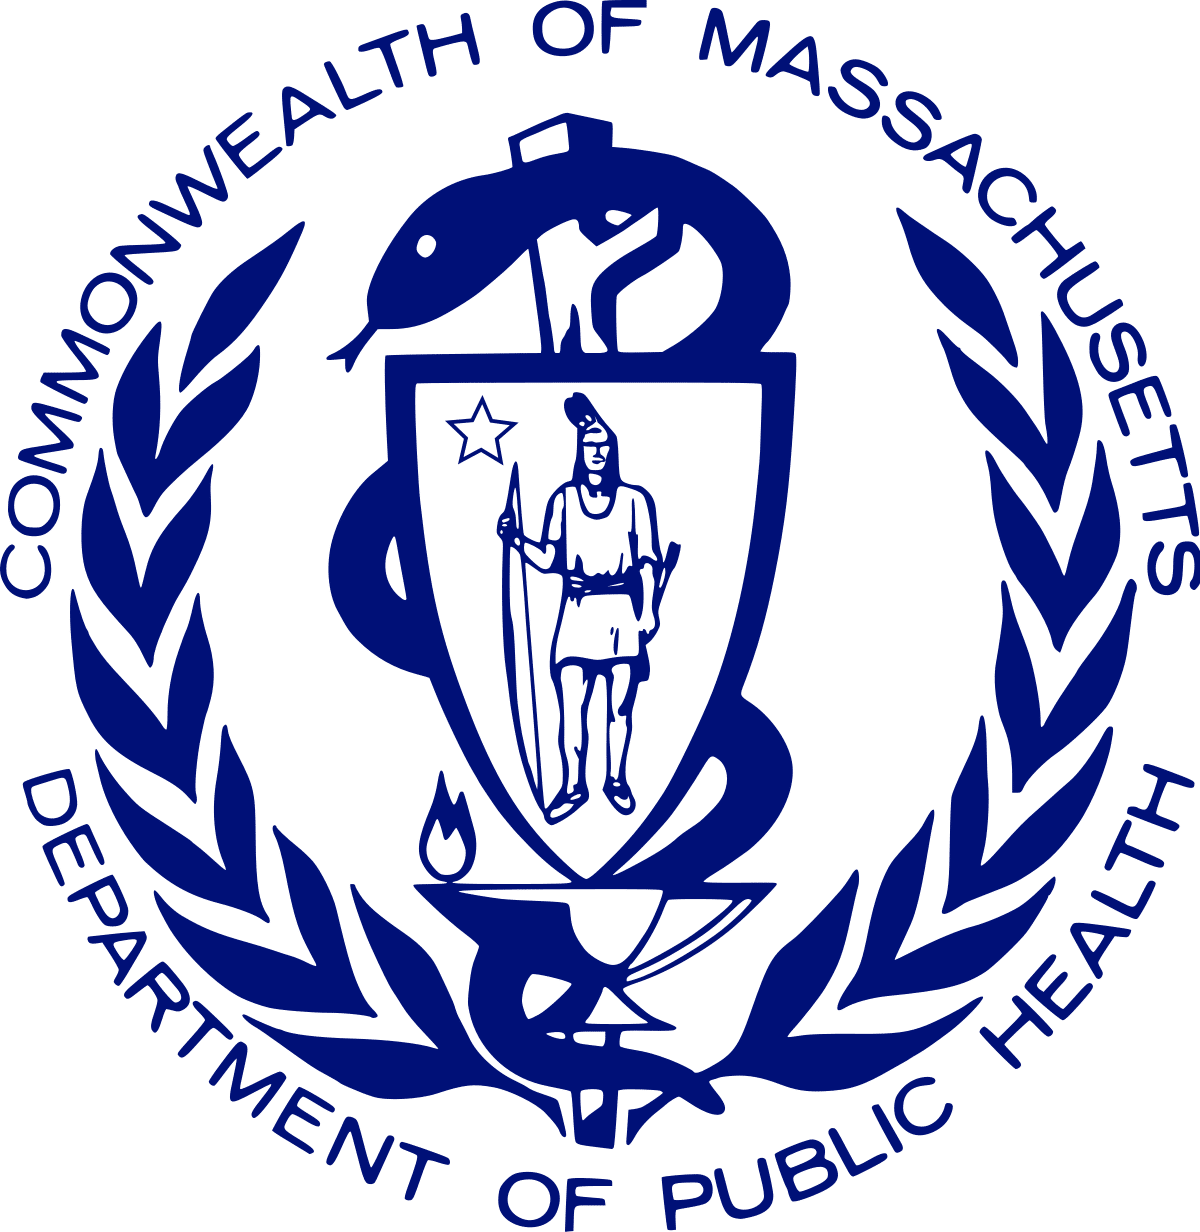 Commonwealth of Massachuetts Department of Public Health